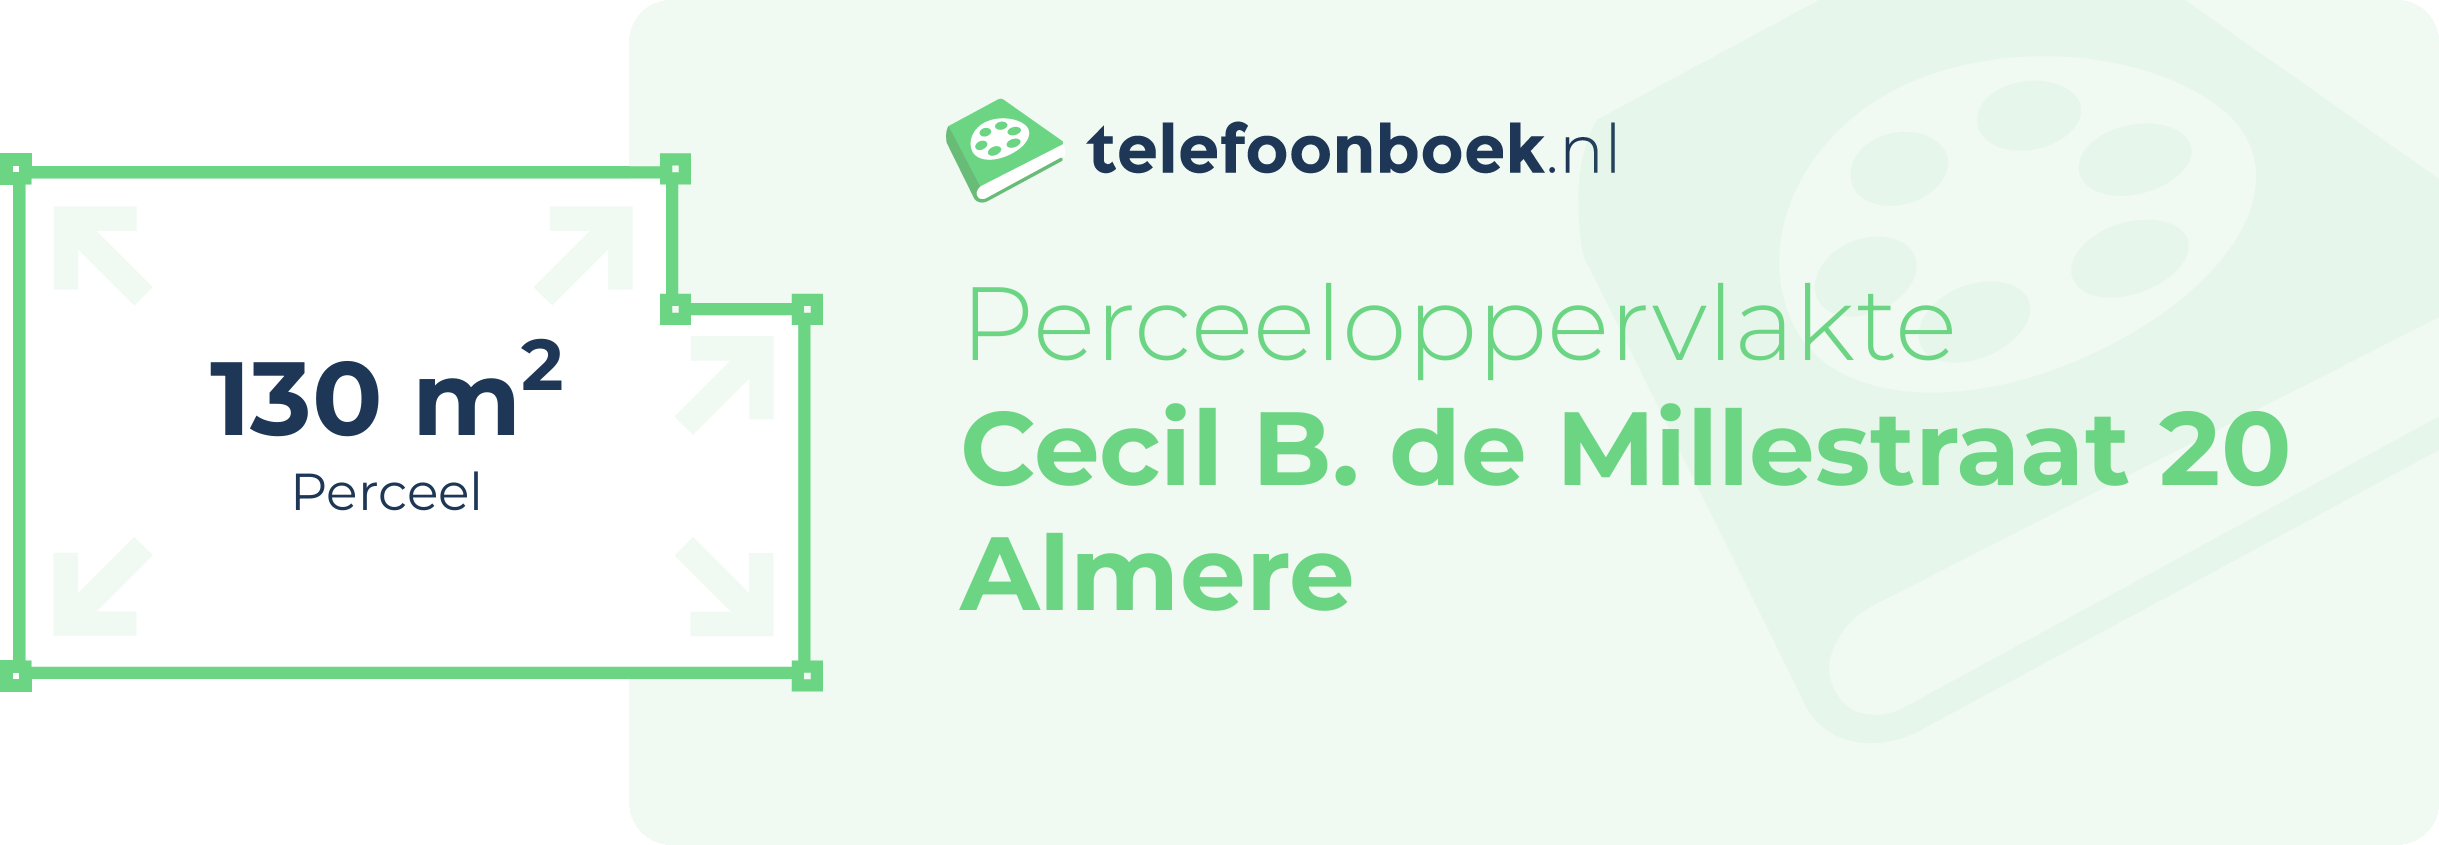 Perceeloppervlakte Cecil B. De Millestraat 20 Almere